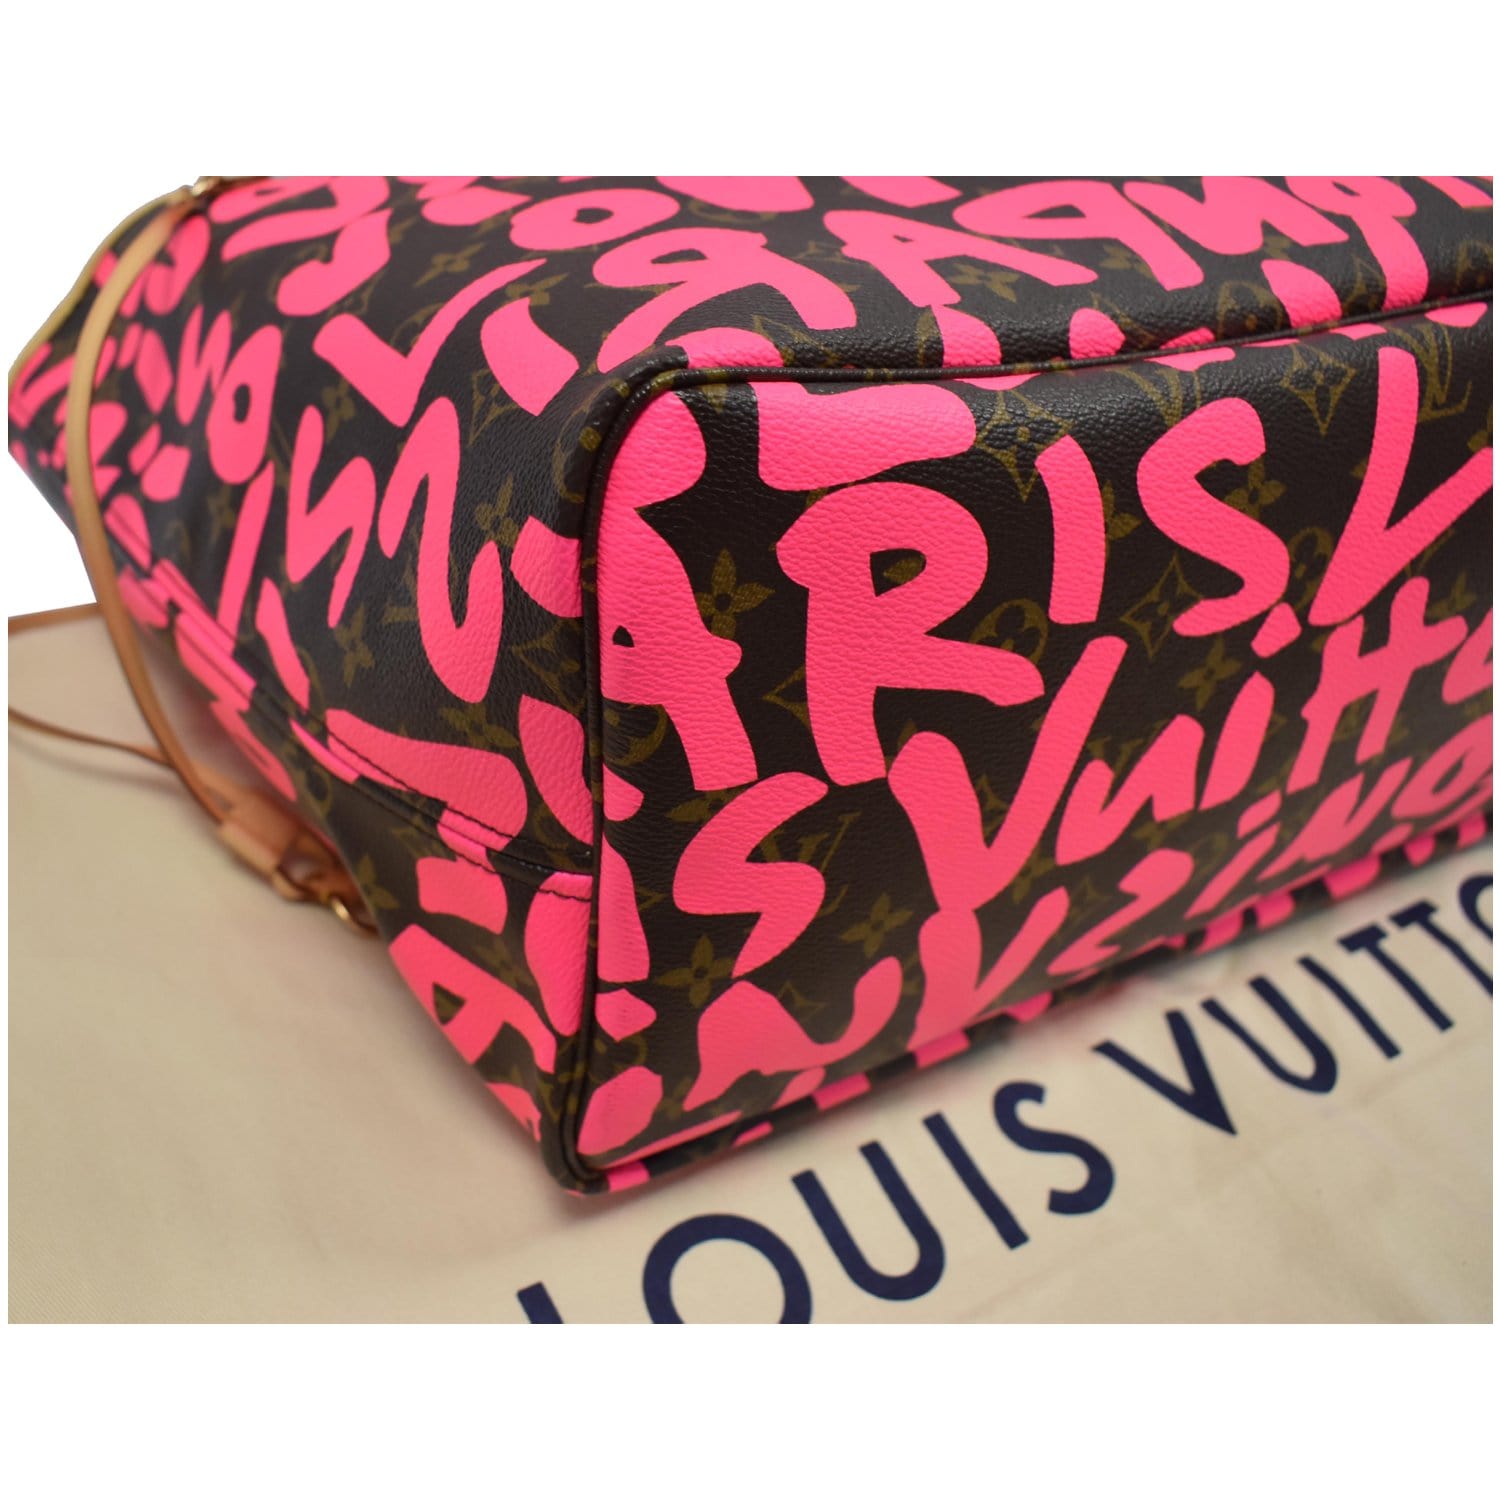 Louis Vuitton Neverfull Graffiti Bag - 2 For Sale on 1stDibs